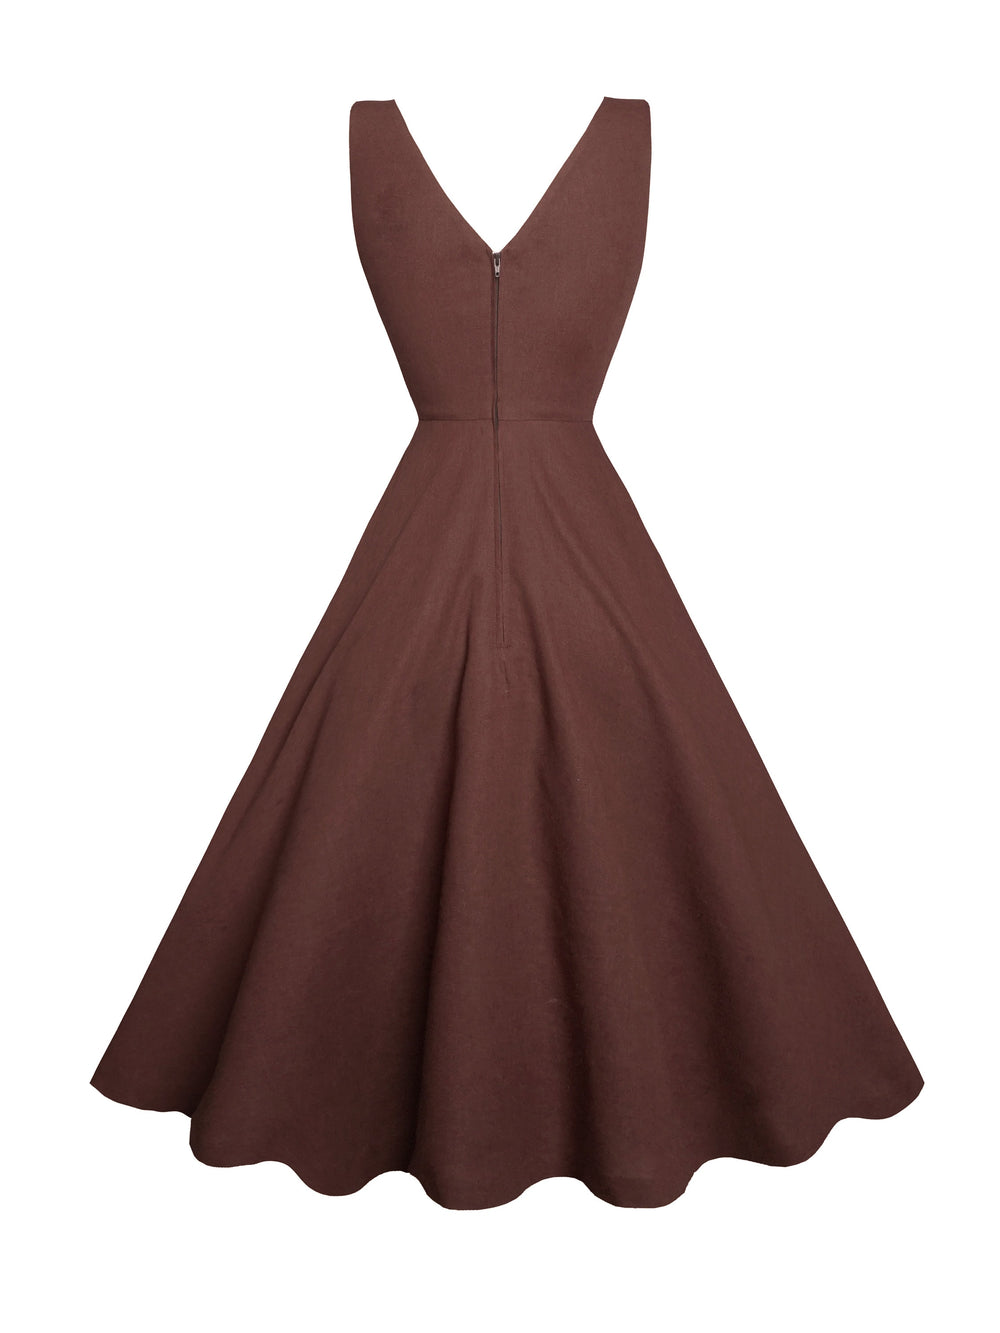 MTO - Diana Dress in Walnut Linen